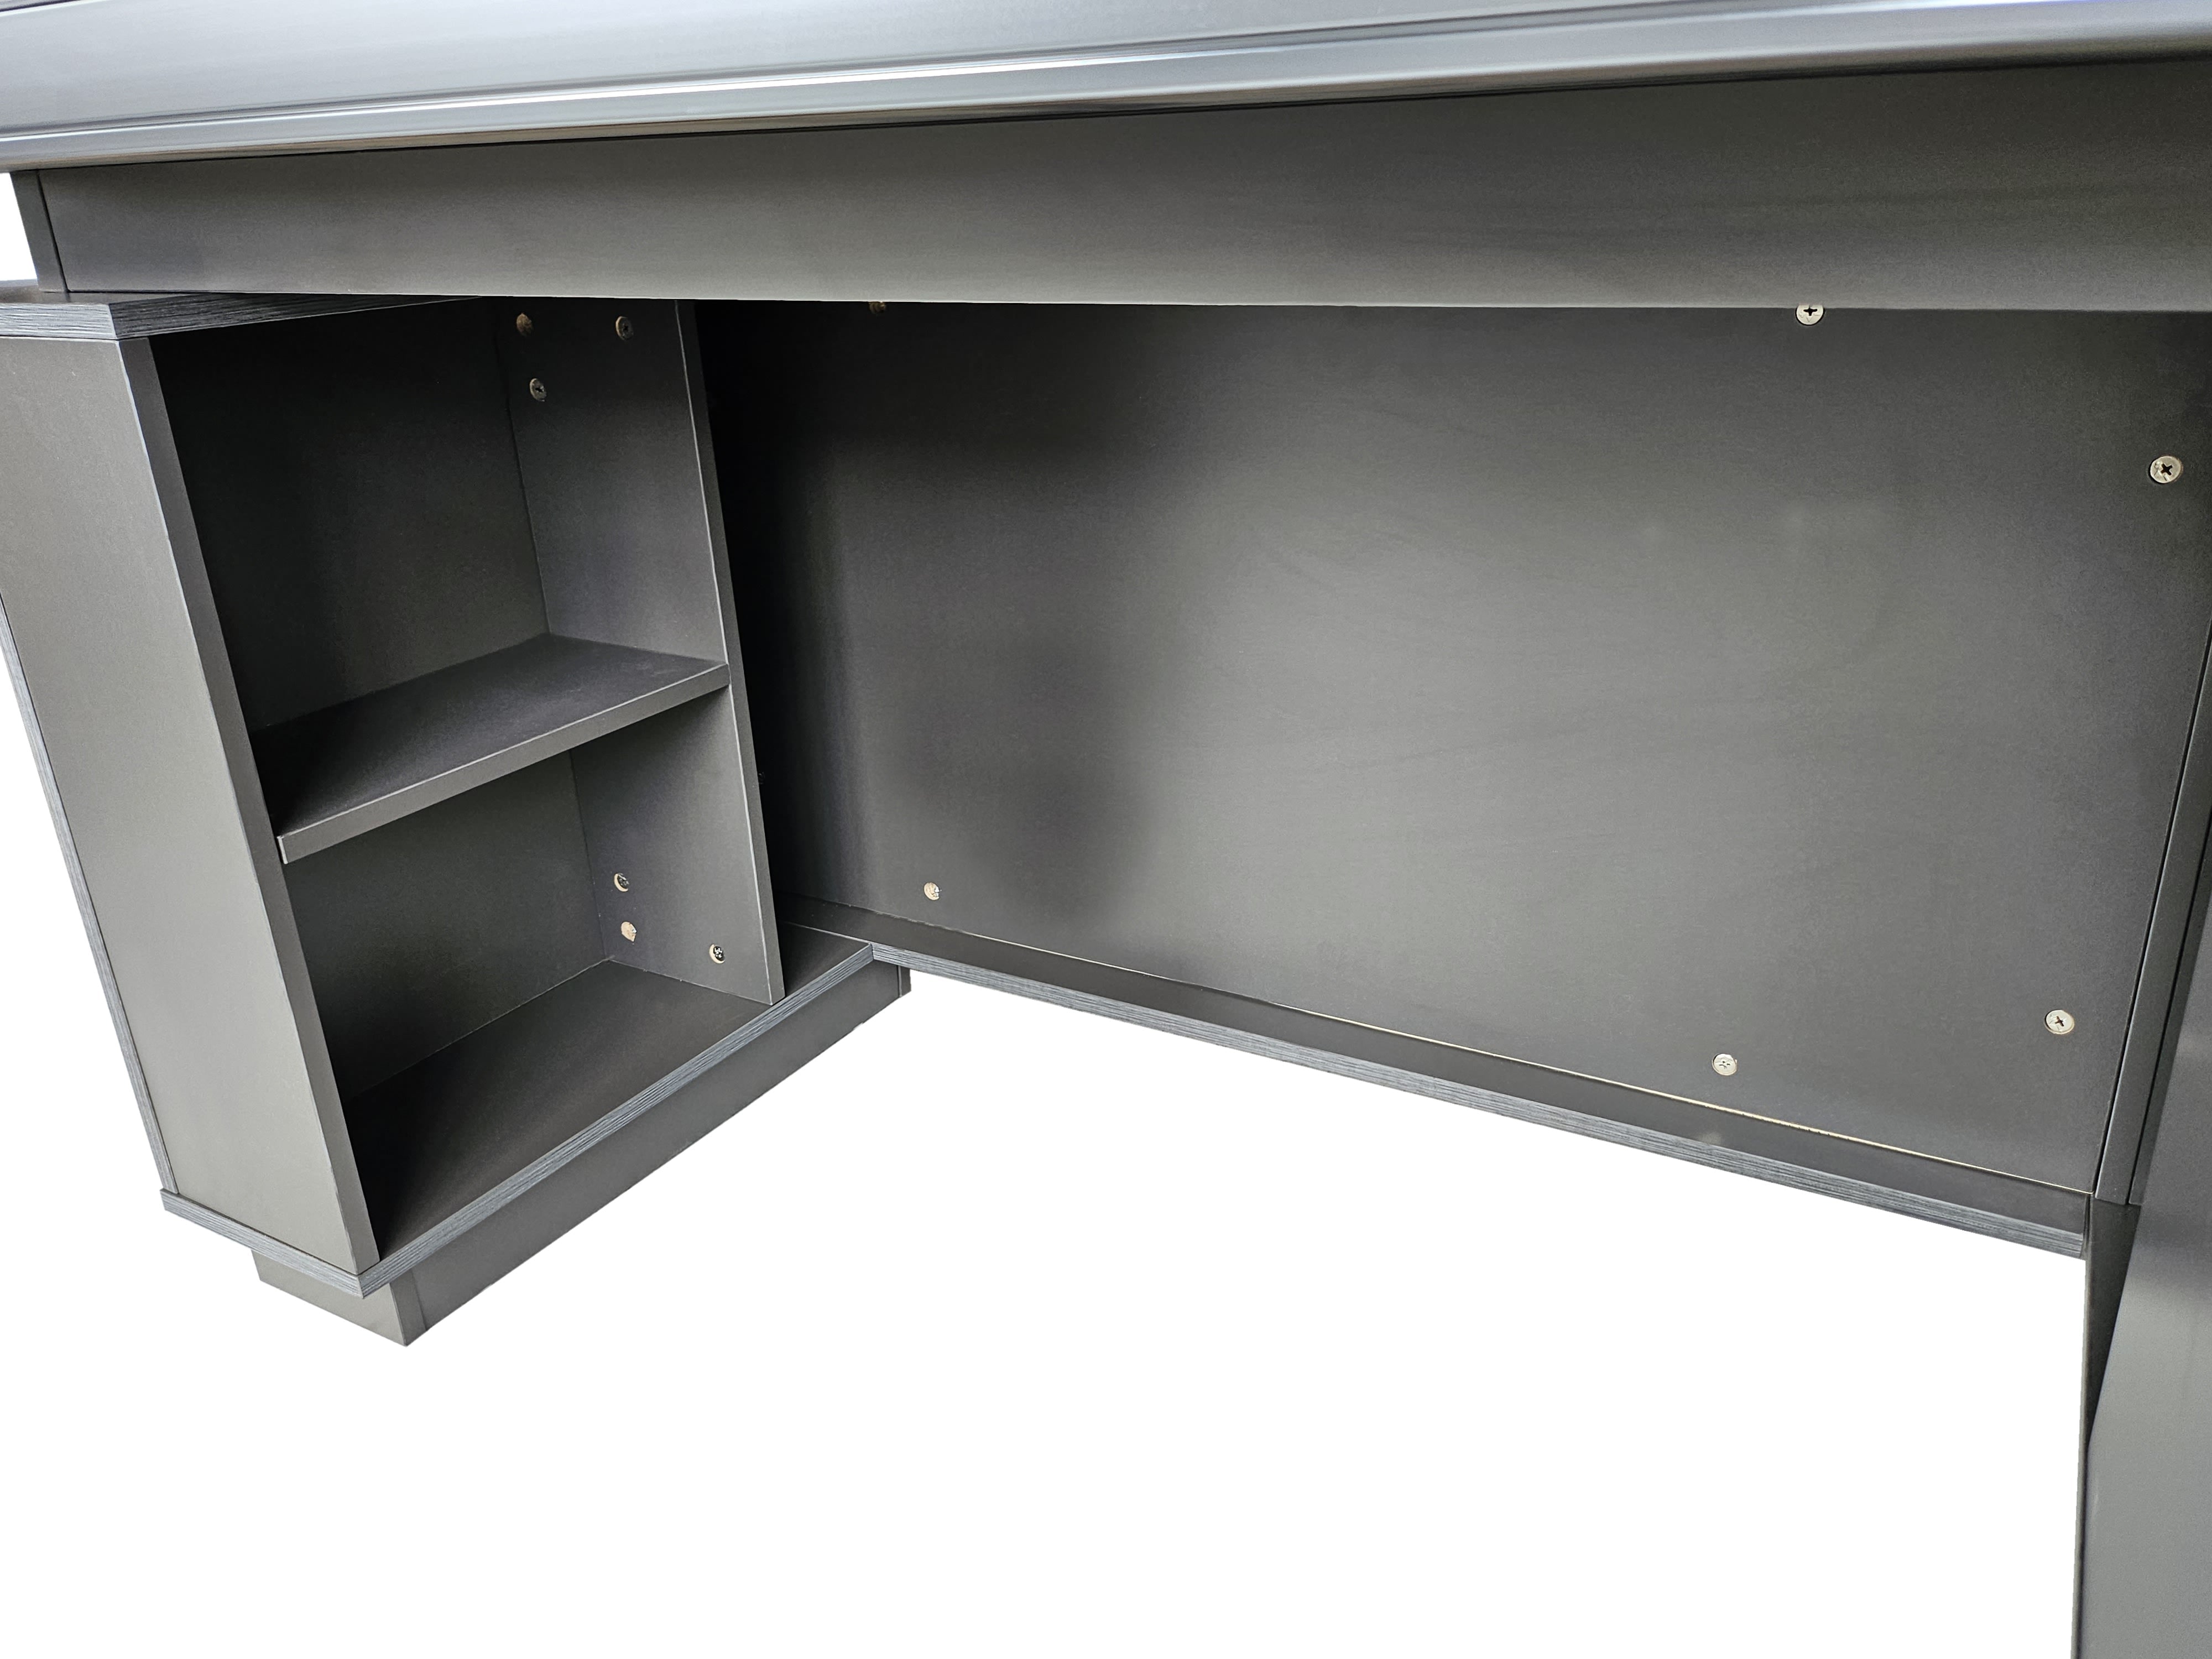 Grey Oak Melamine Executive Straight Office Desk with Full Length Desktop - 1800mm - WKO-FL-S-D0518